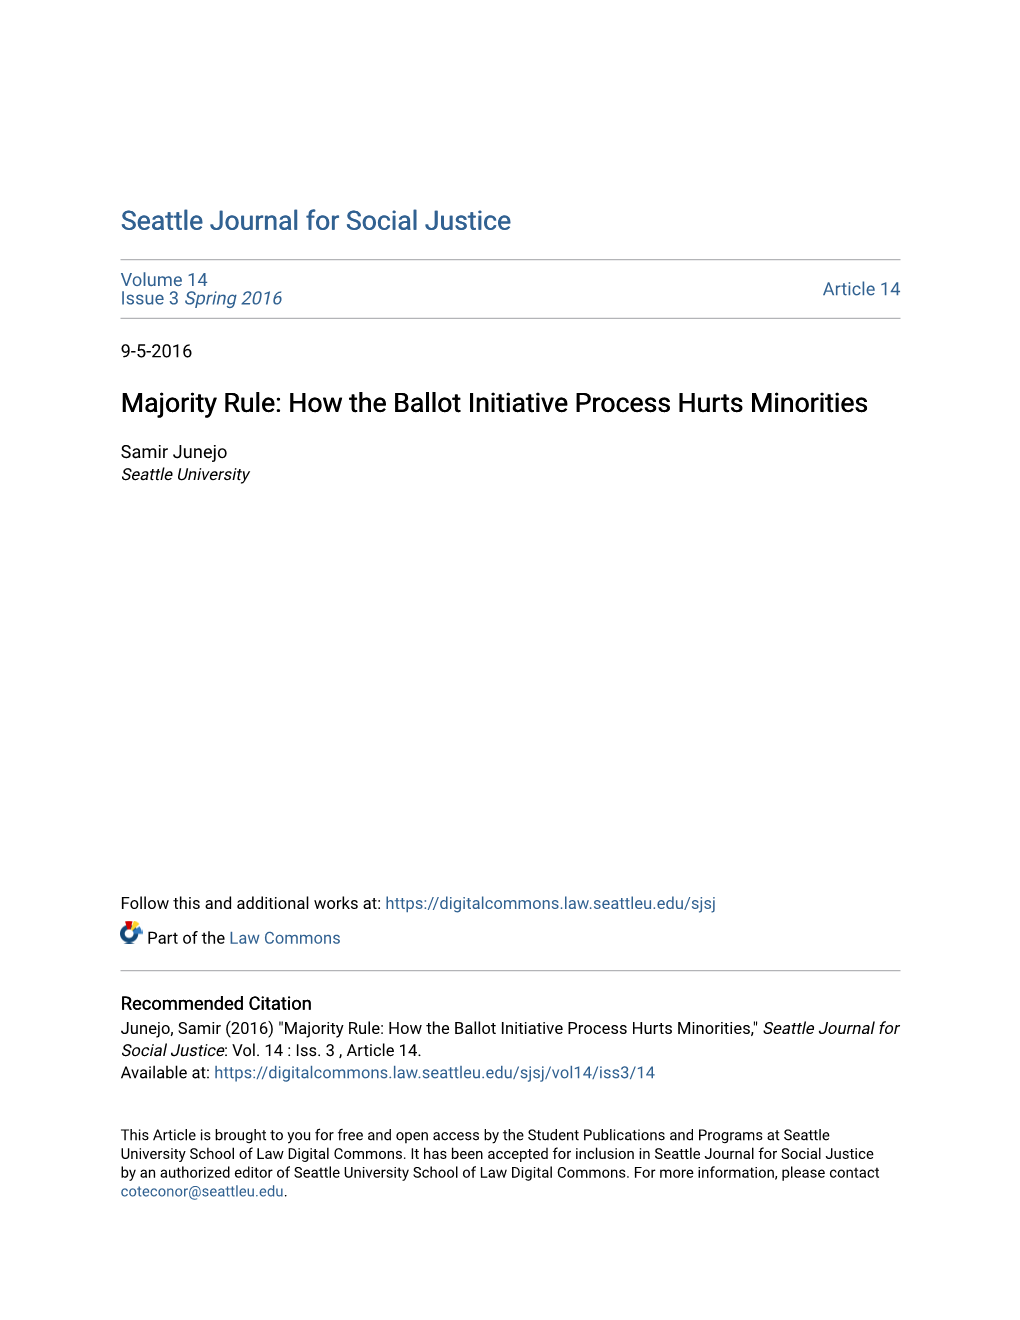 Majority Rule: How the Ballot Initiative Process Hurts Minorities